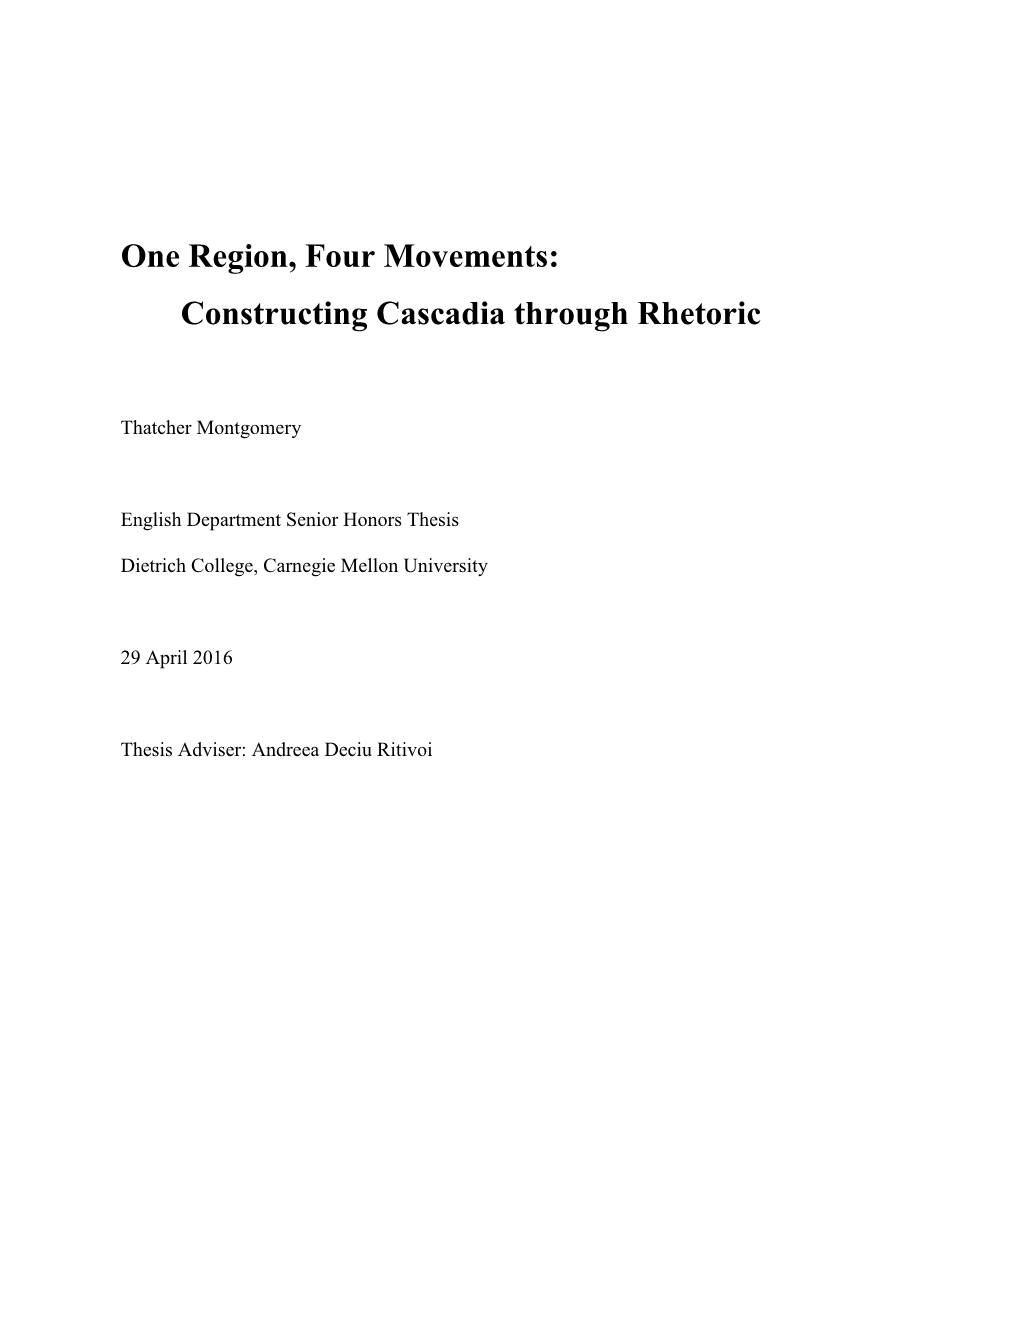 One Region, Four Movements: Constructing Cascadia Through Rhetoric